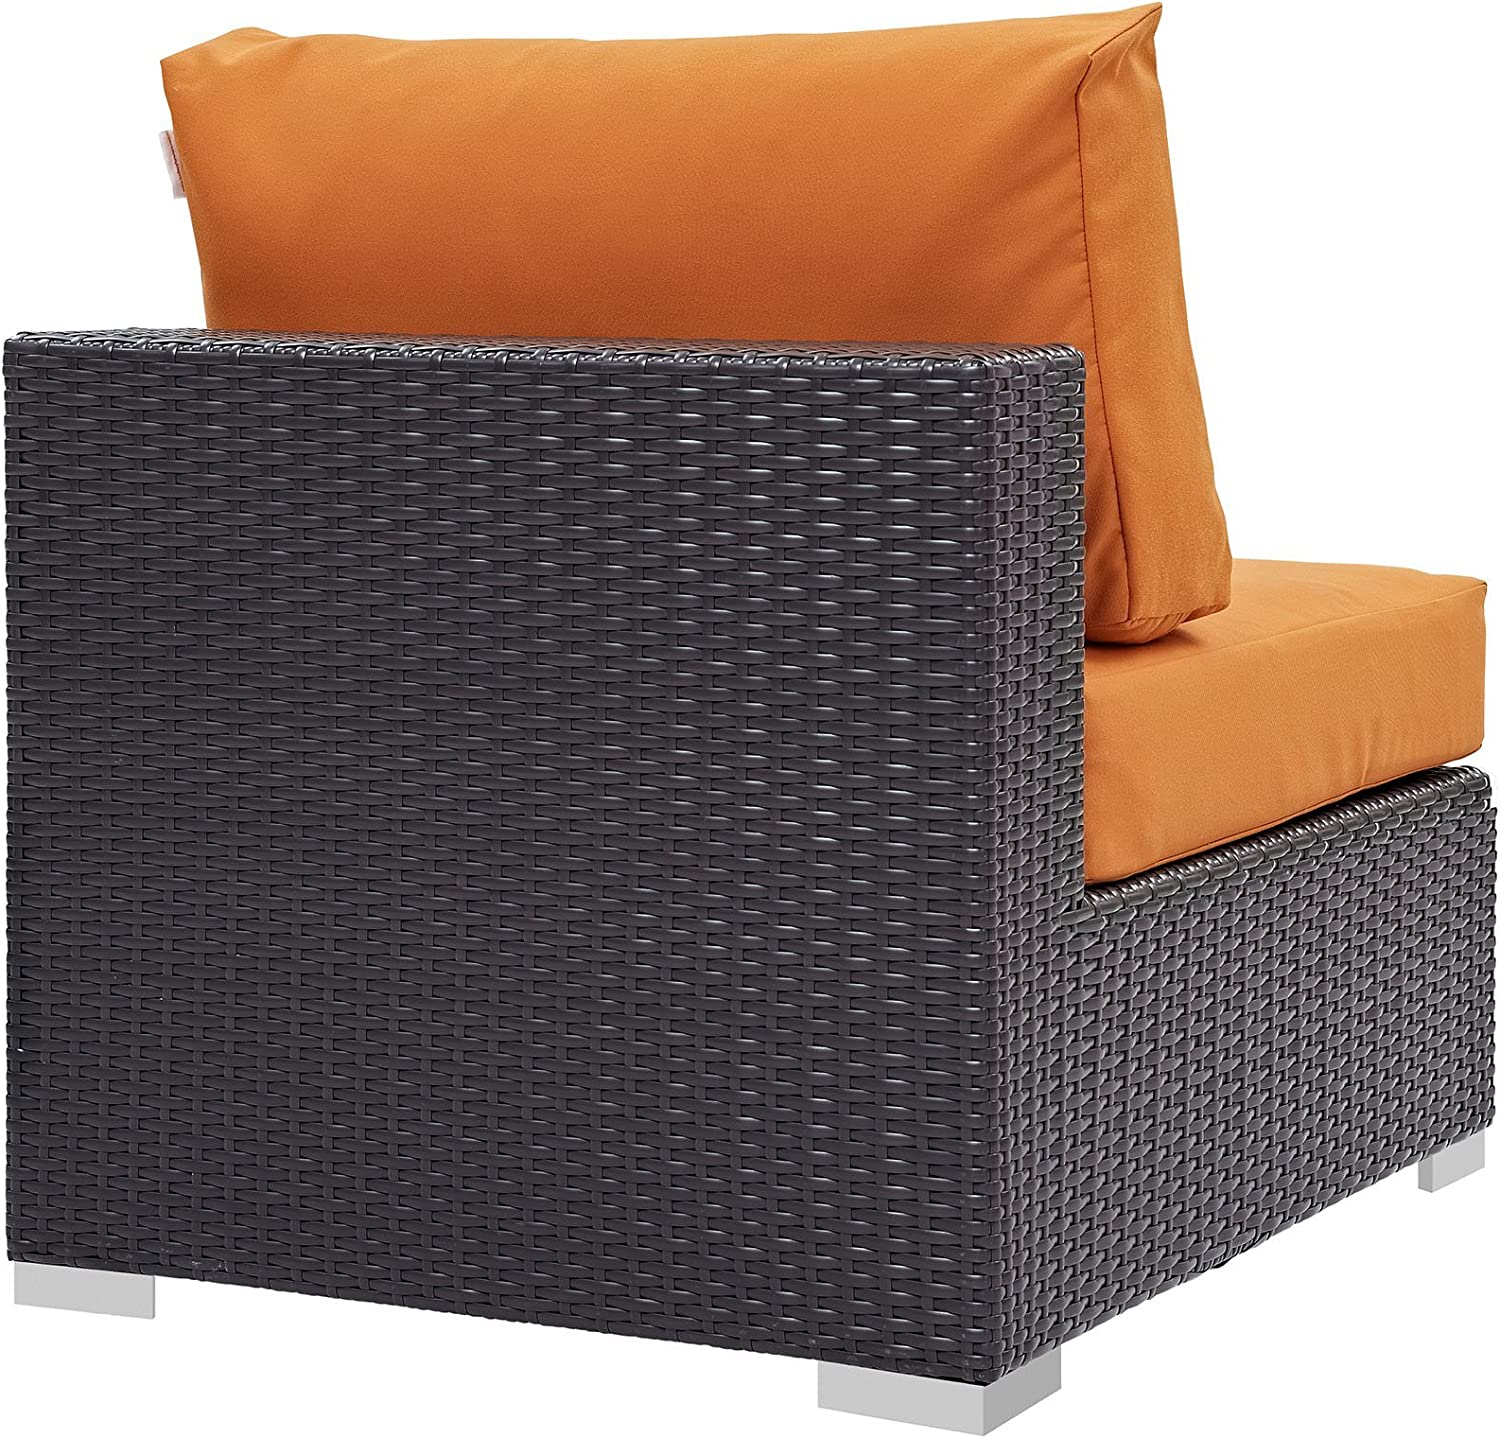 Modway Convene Wicker Rattan Outdoor Patio Sectional Sofa Armless Chair in Espresso Orange